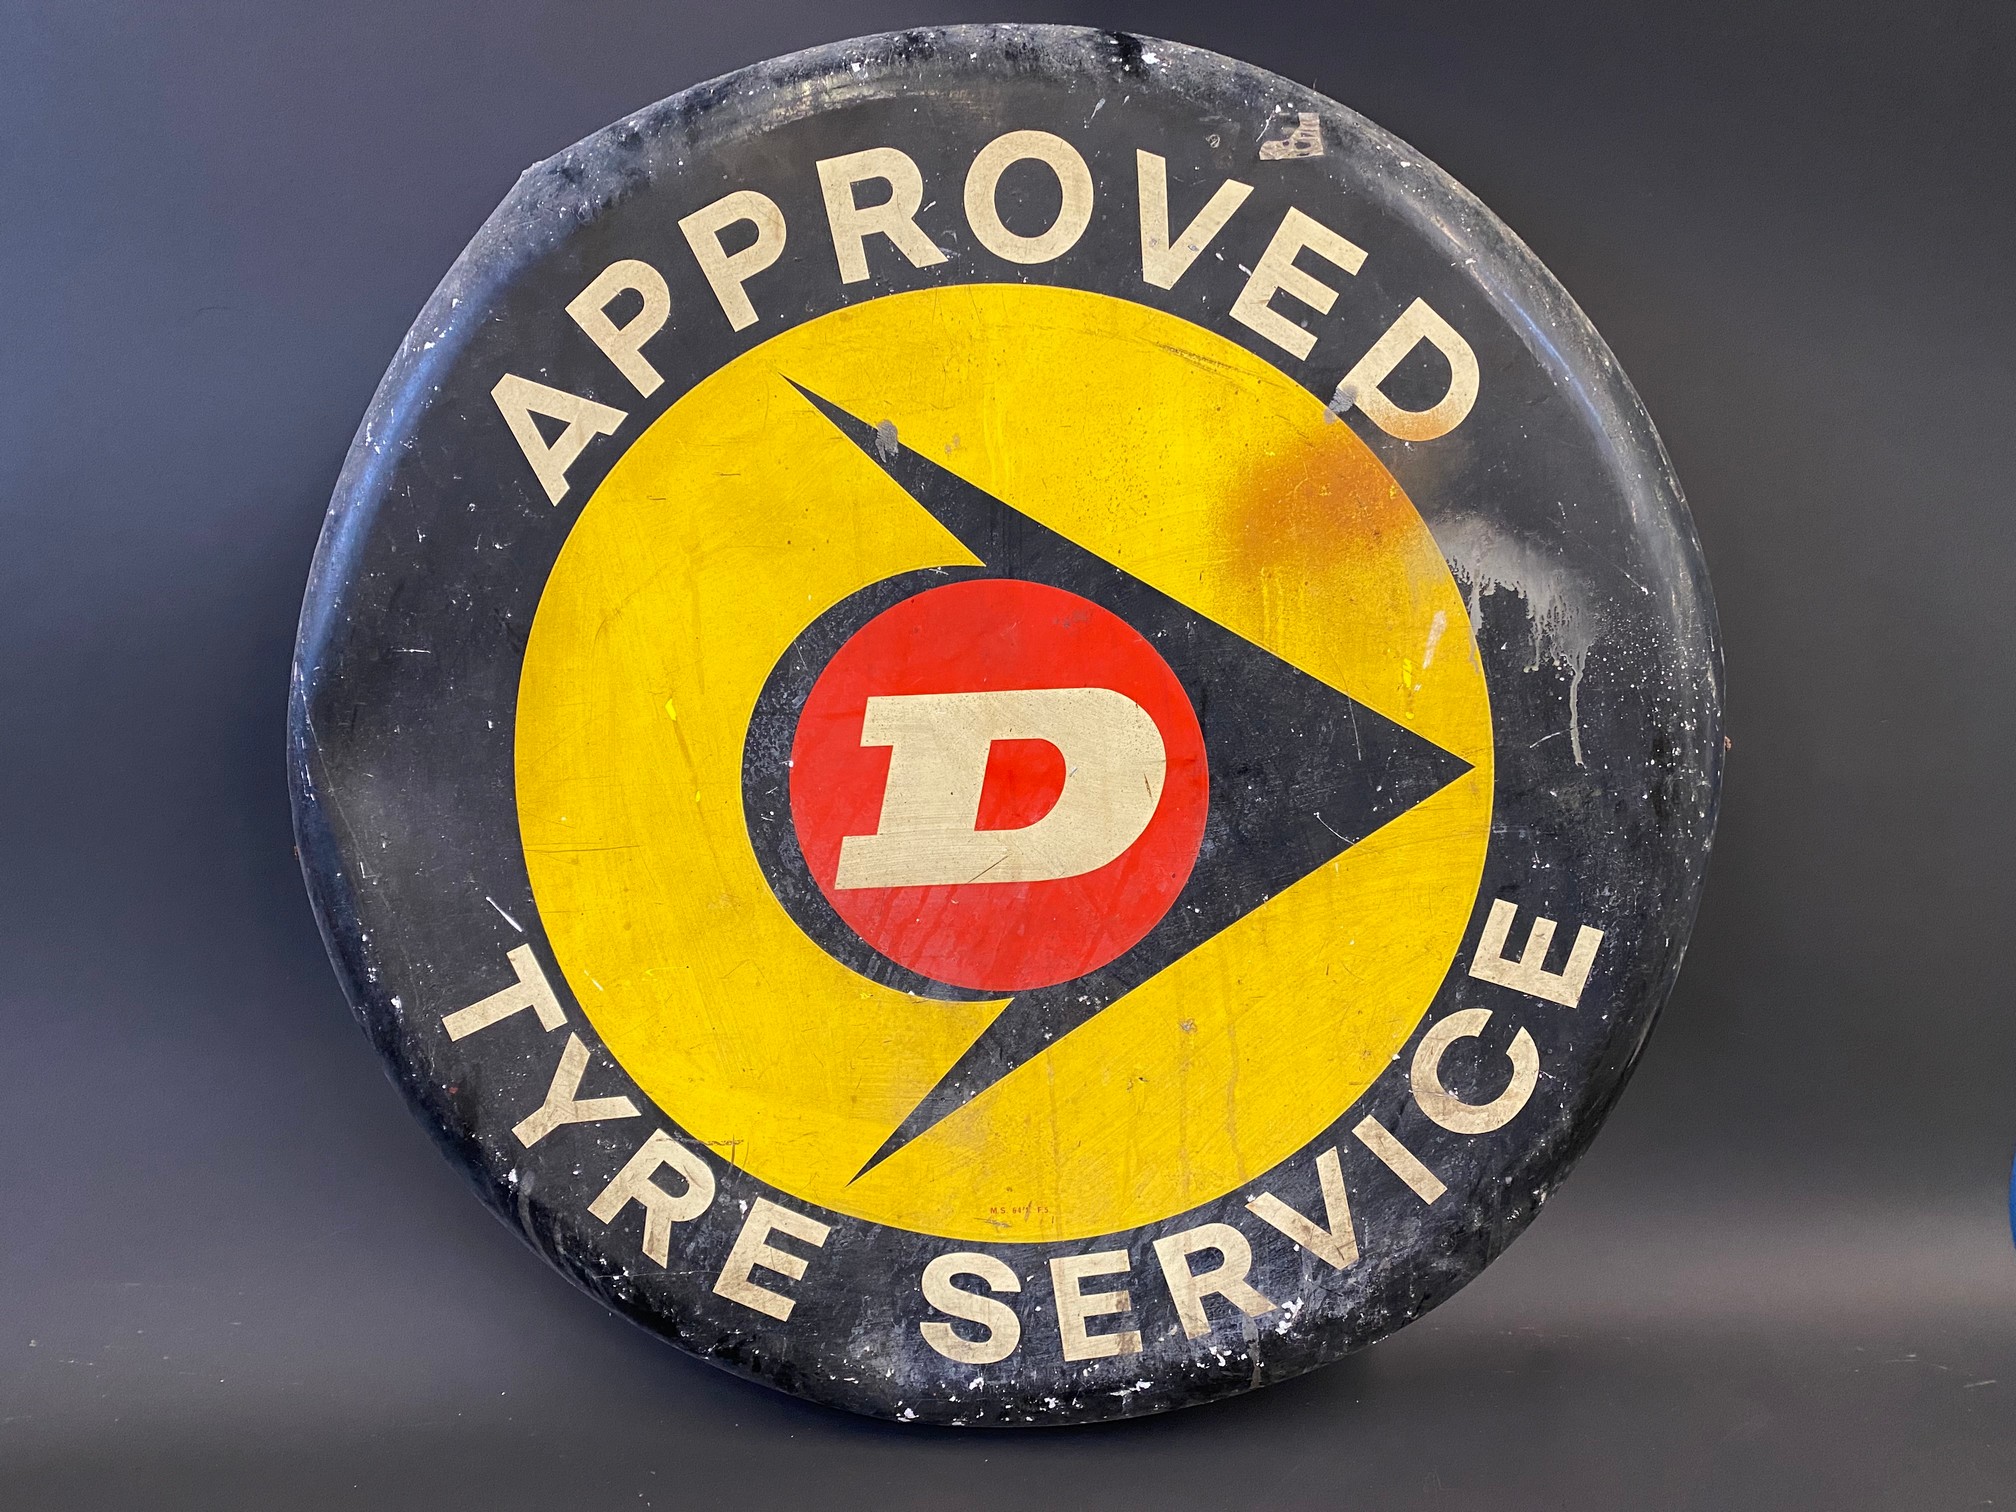 A Dunlop Approved Tyre Service circular tin advertising sign, 30" diameter.